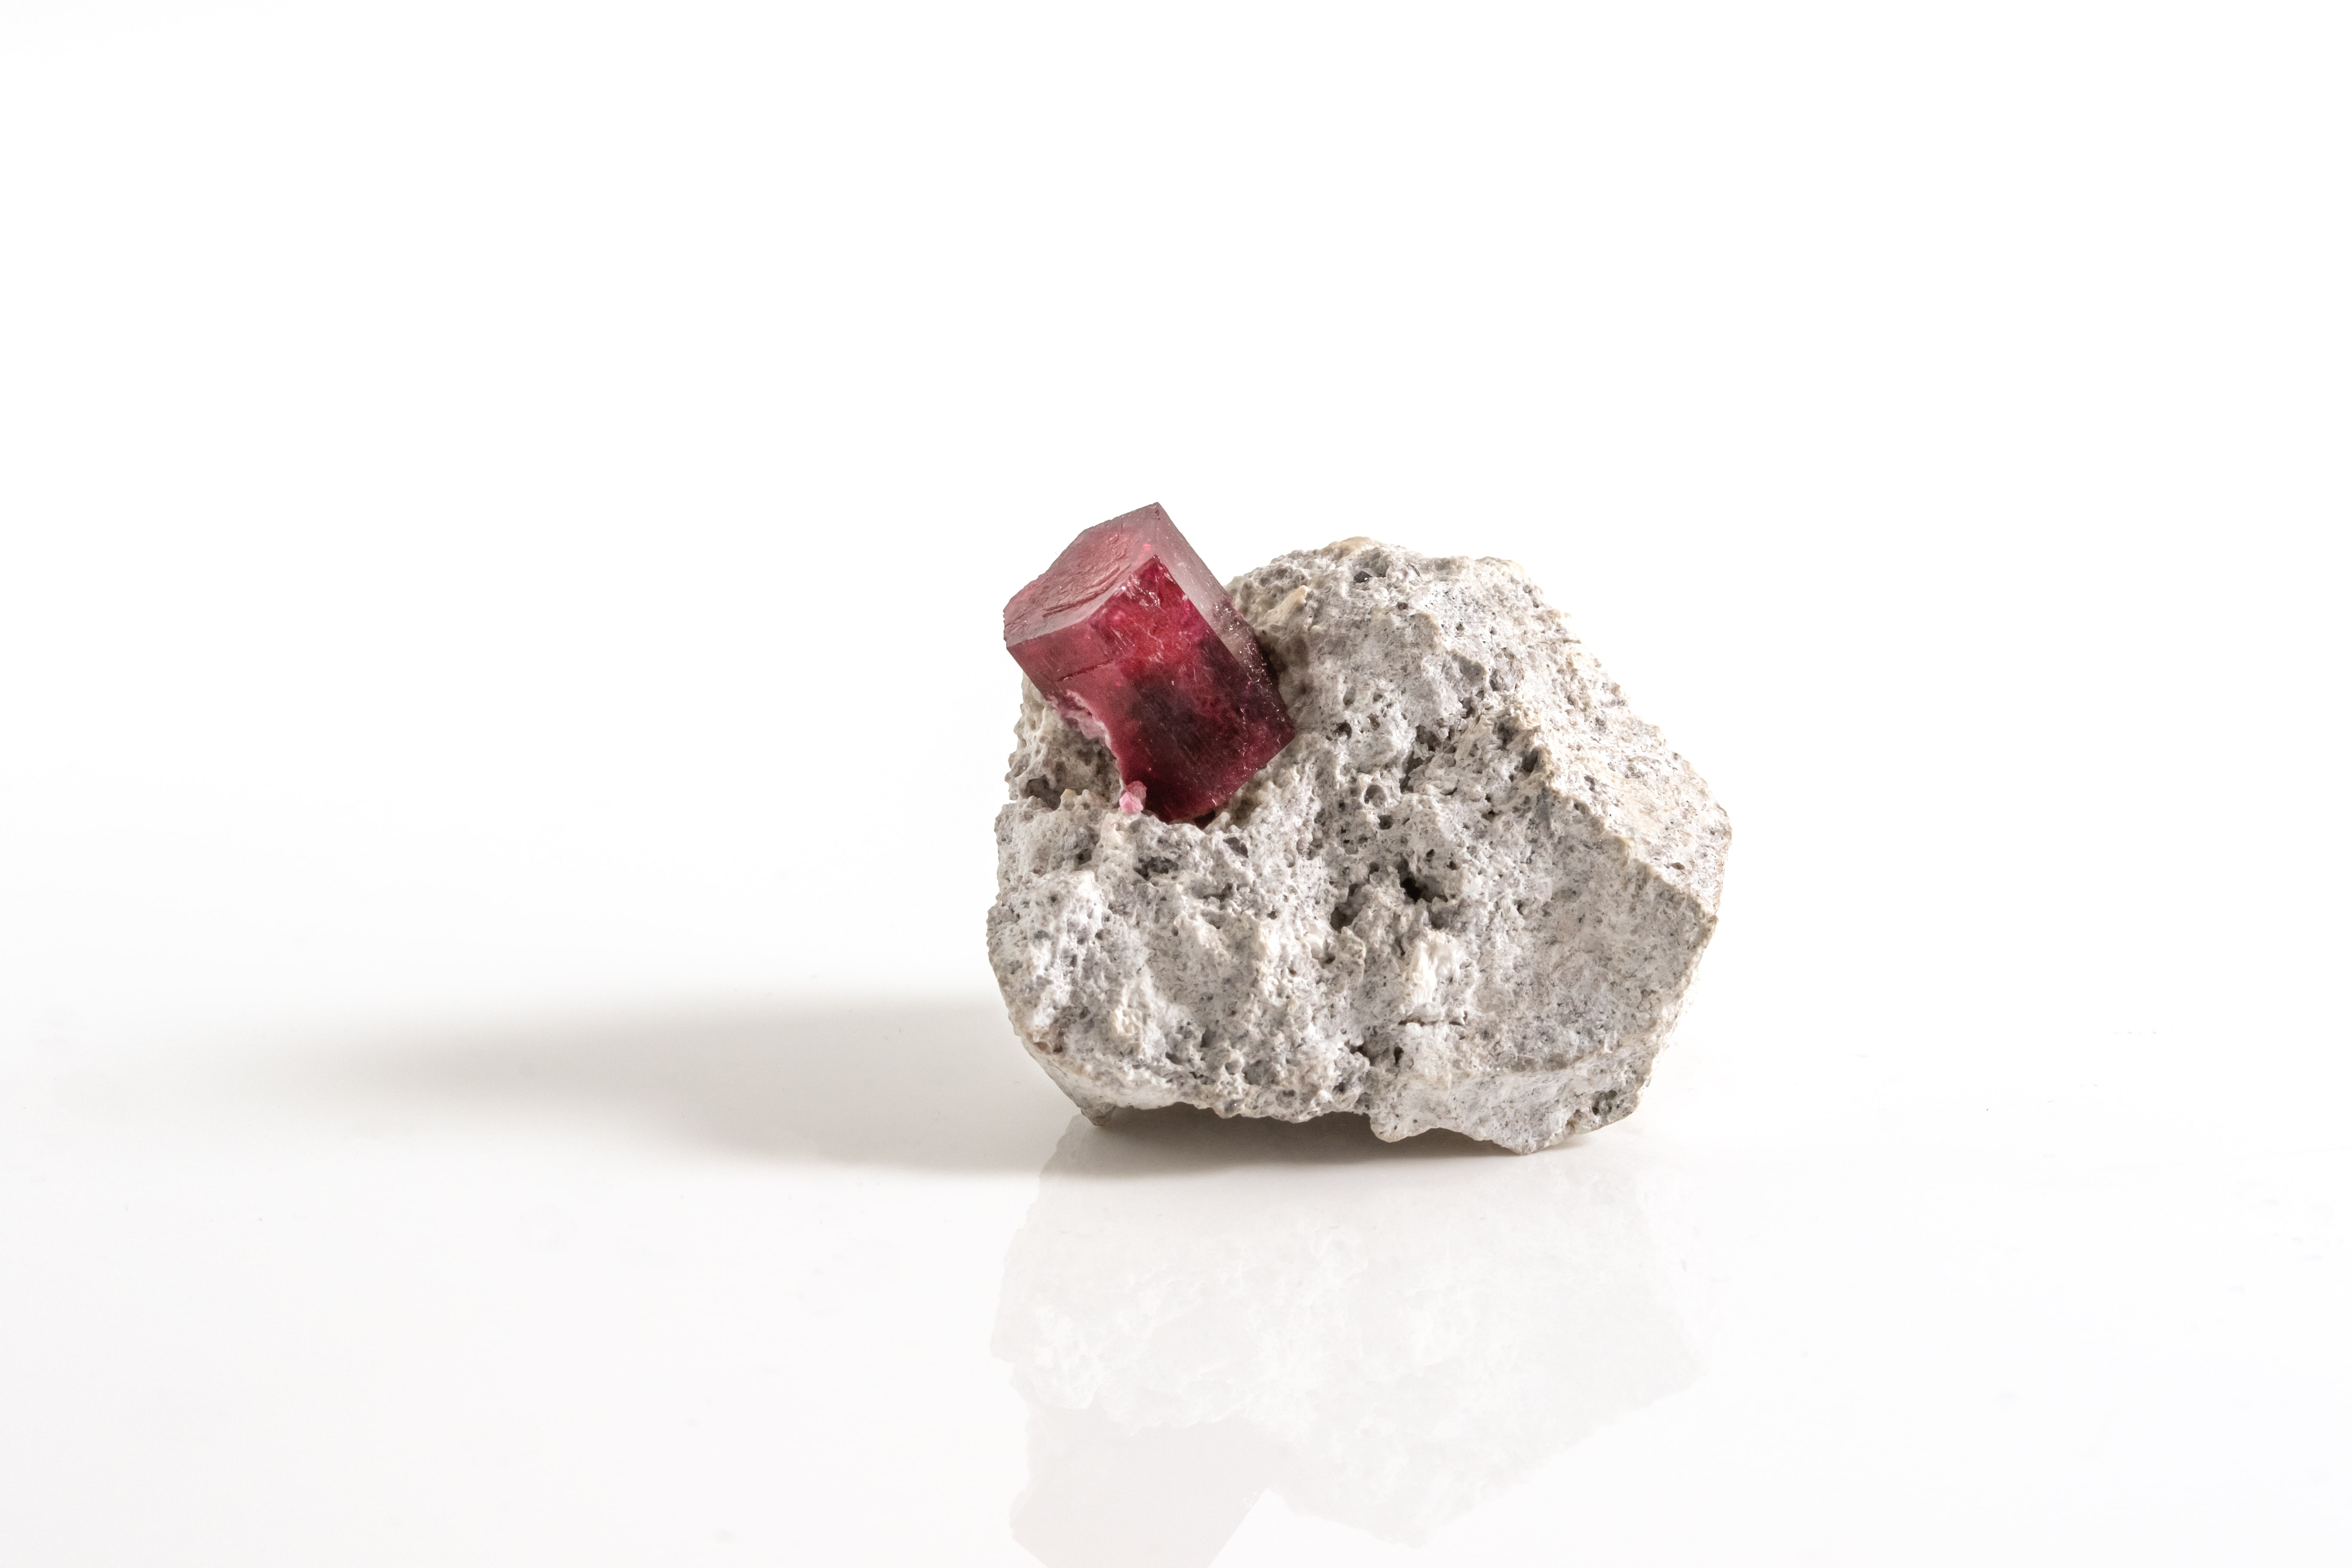 American Gemstones: Red Beryl from Utah - - red beryl crystal in matrix jtv min